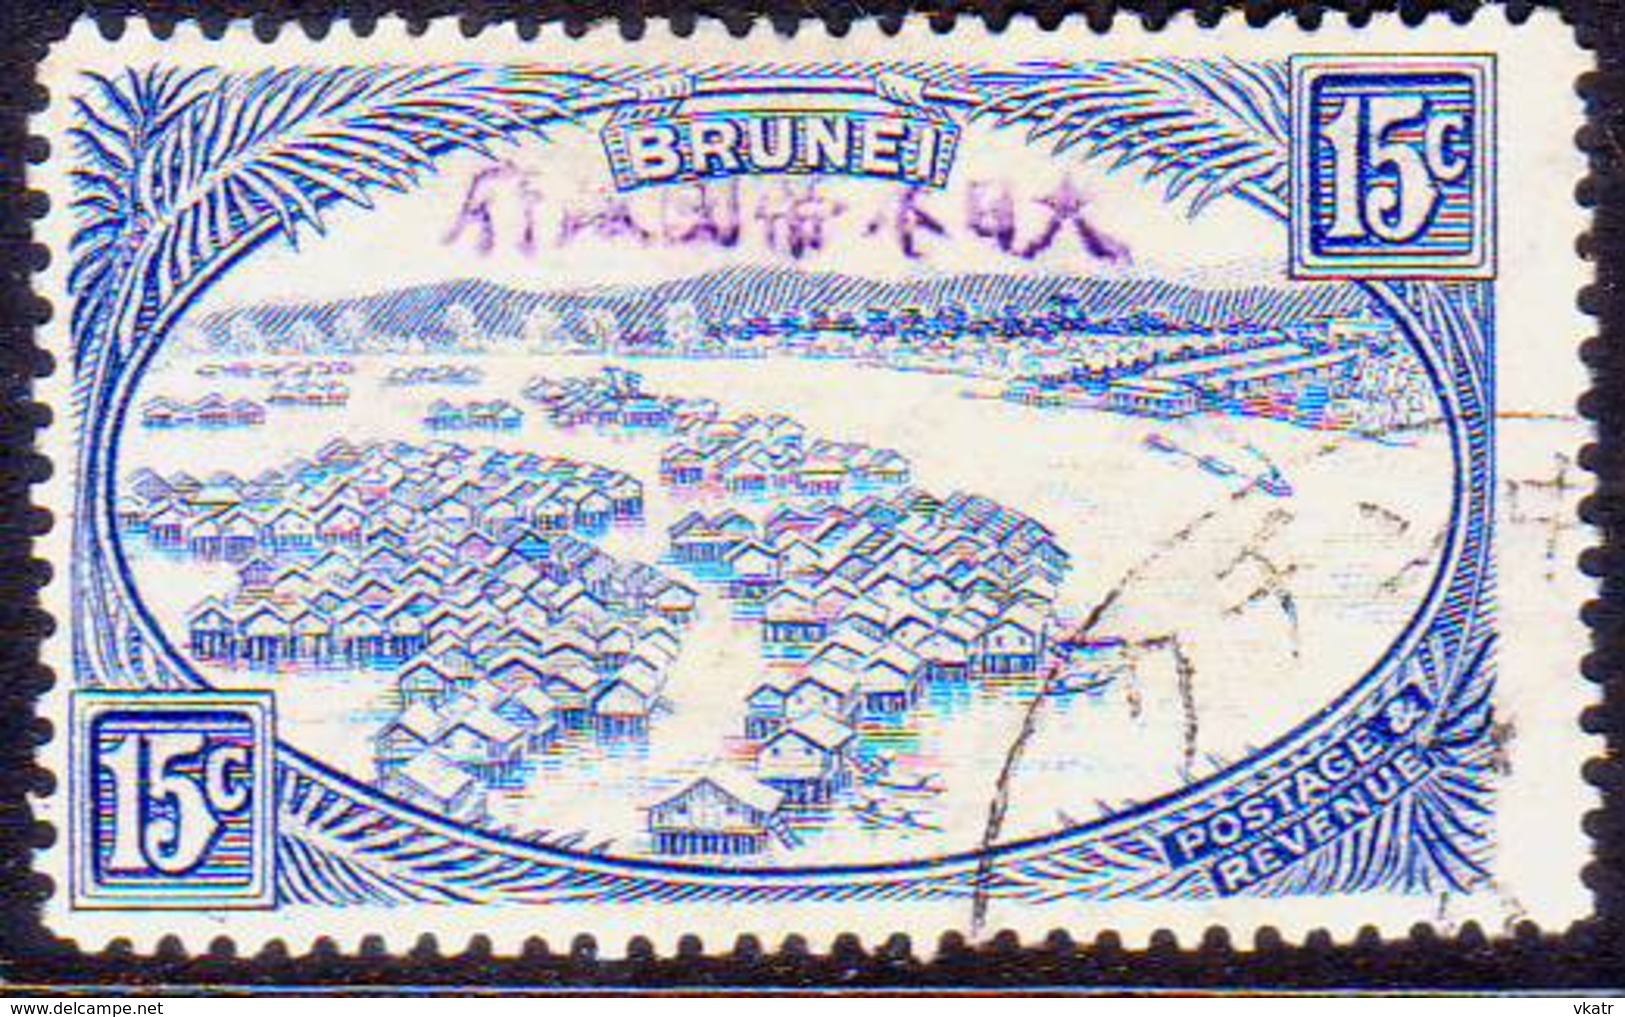 JAPANESE OCCUPATION OF BRUNEI 1942-44 SG J13 15c Used CV £26 - Brunei (...-1984)